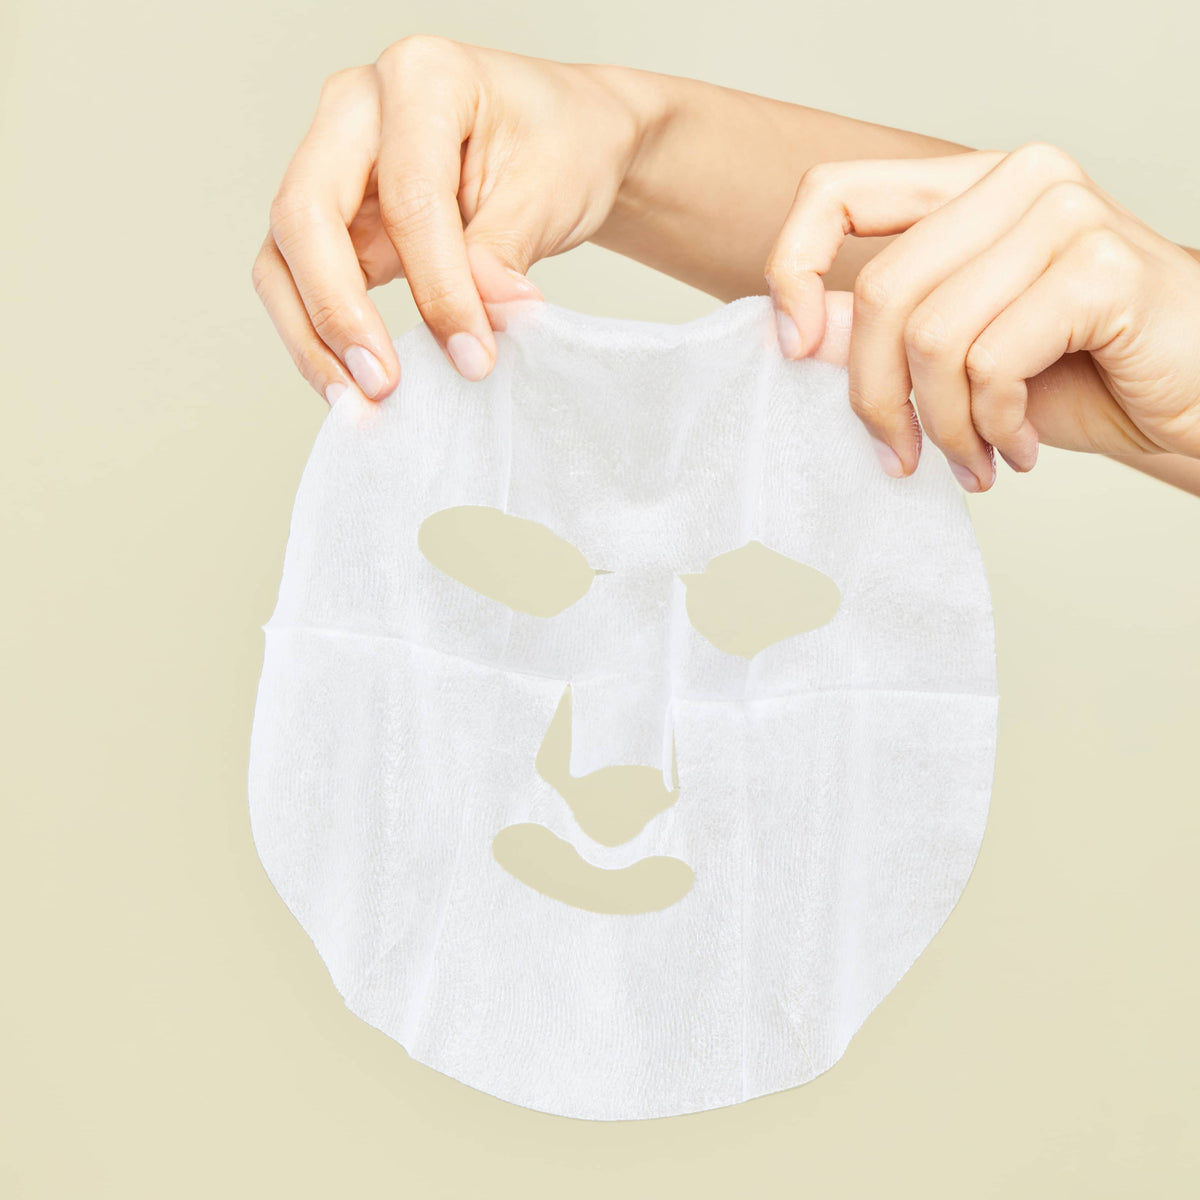 Auspicious-1 Pcs Masque respiratoire, Kit de masque de protection